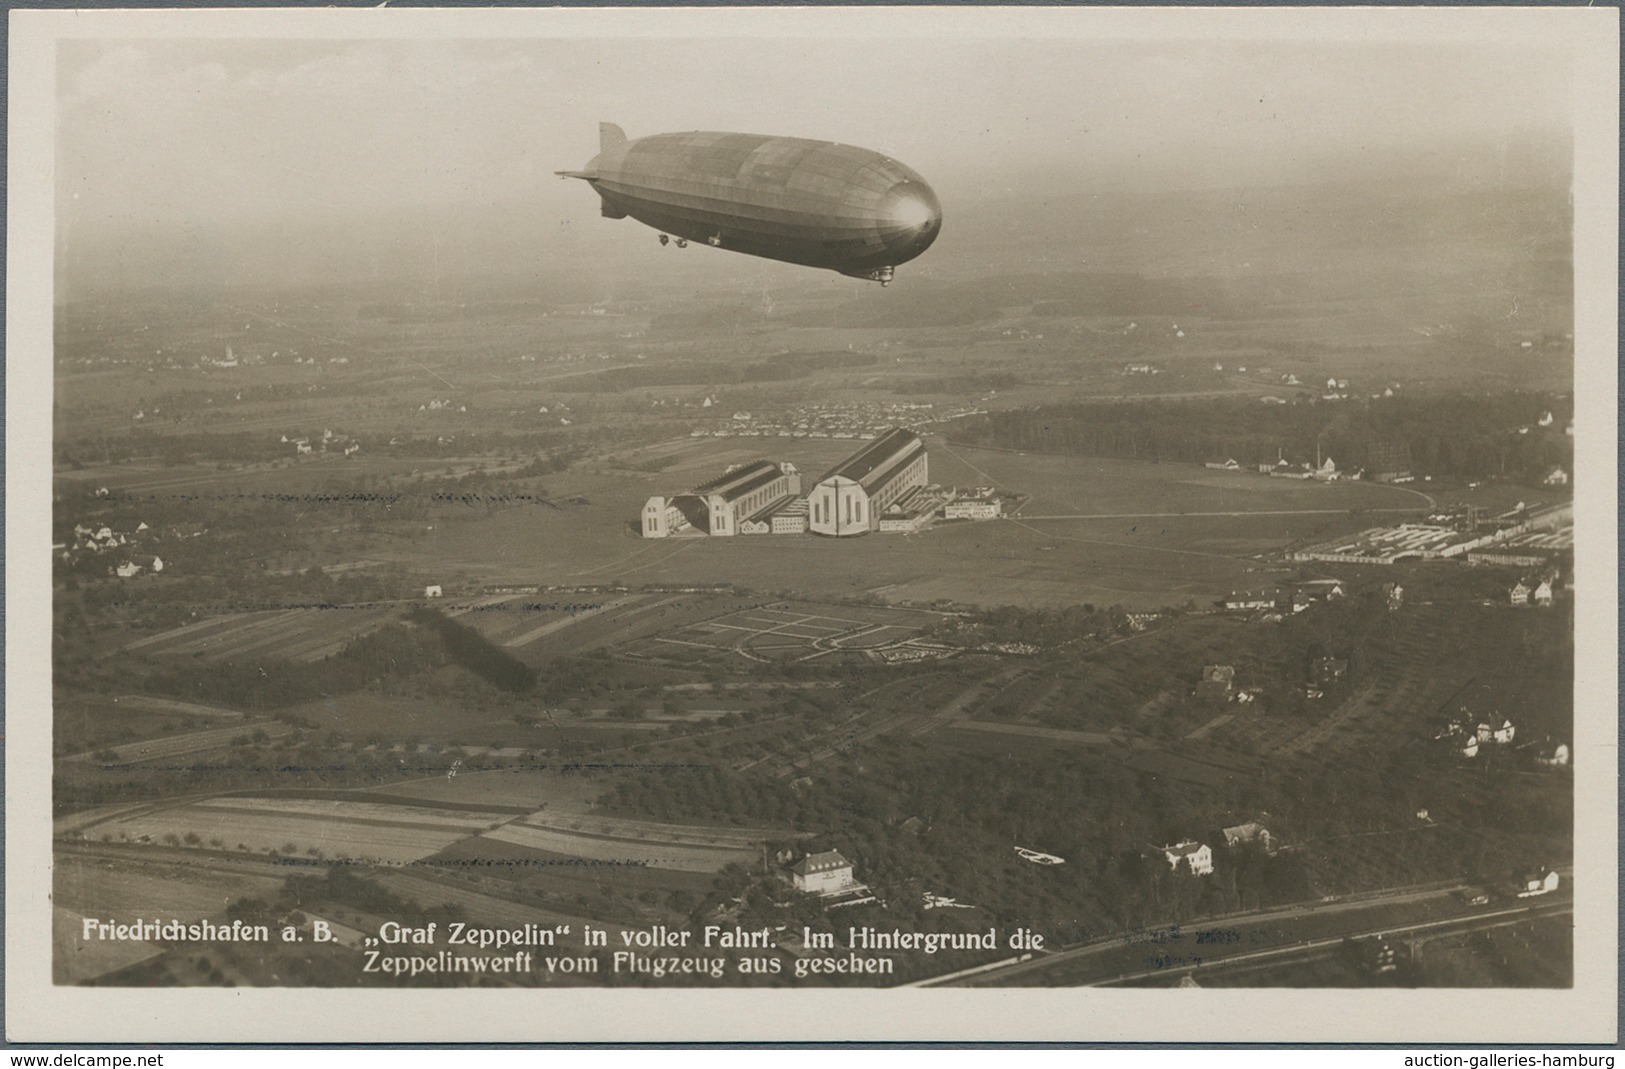 Zeppelinpost Deutschland: 1930, Schweiz-/Vaduz-Fahrt, Zeppelin-Ansichtskarte Frankiert Mit 1 RM Rhei - Correo Aéreo & Zeppelin